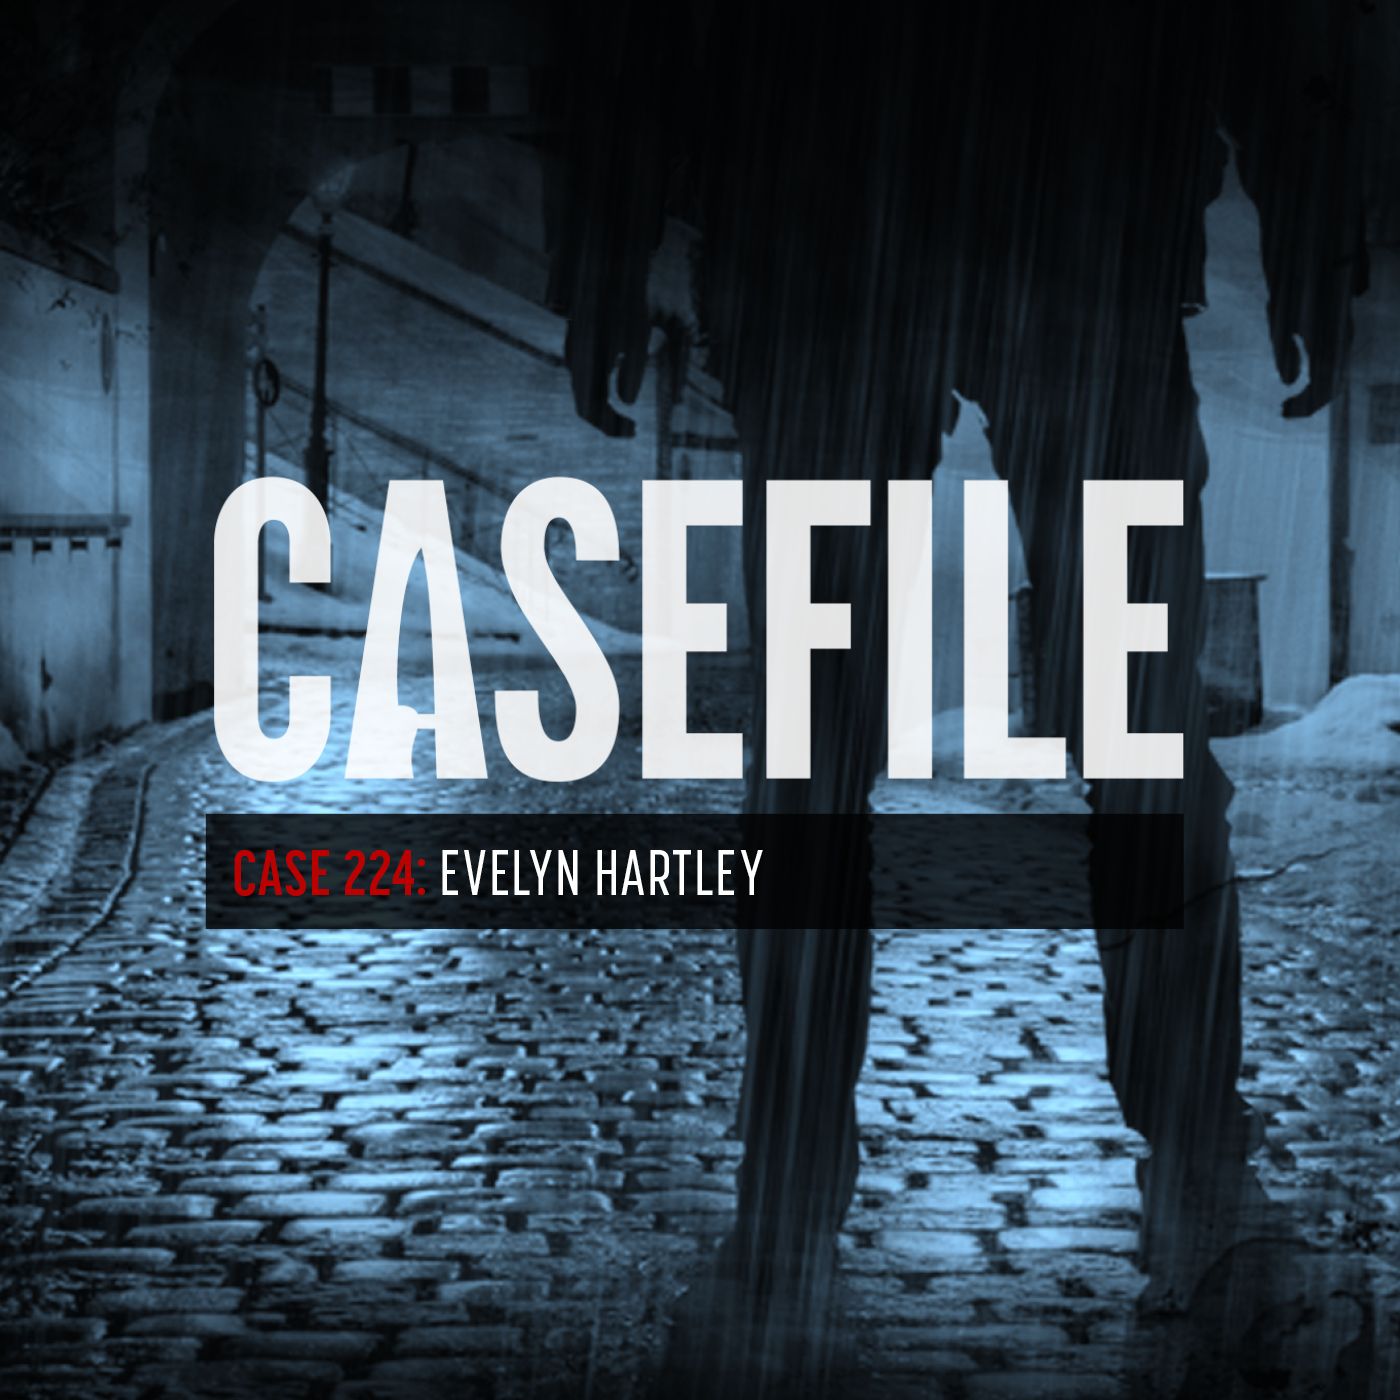 Case 224: Evelyn Hartley